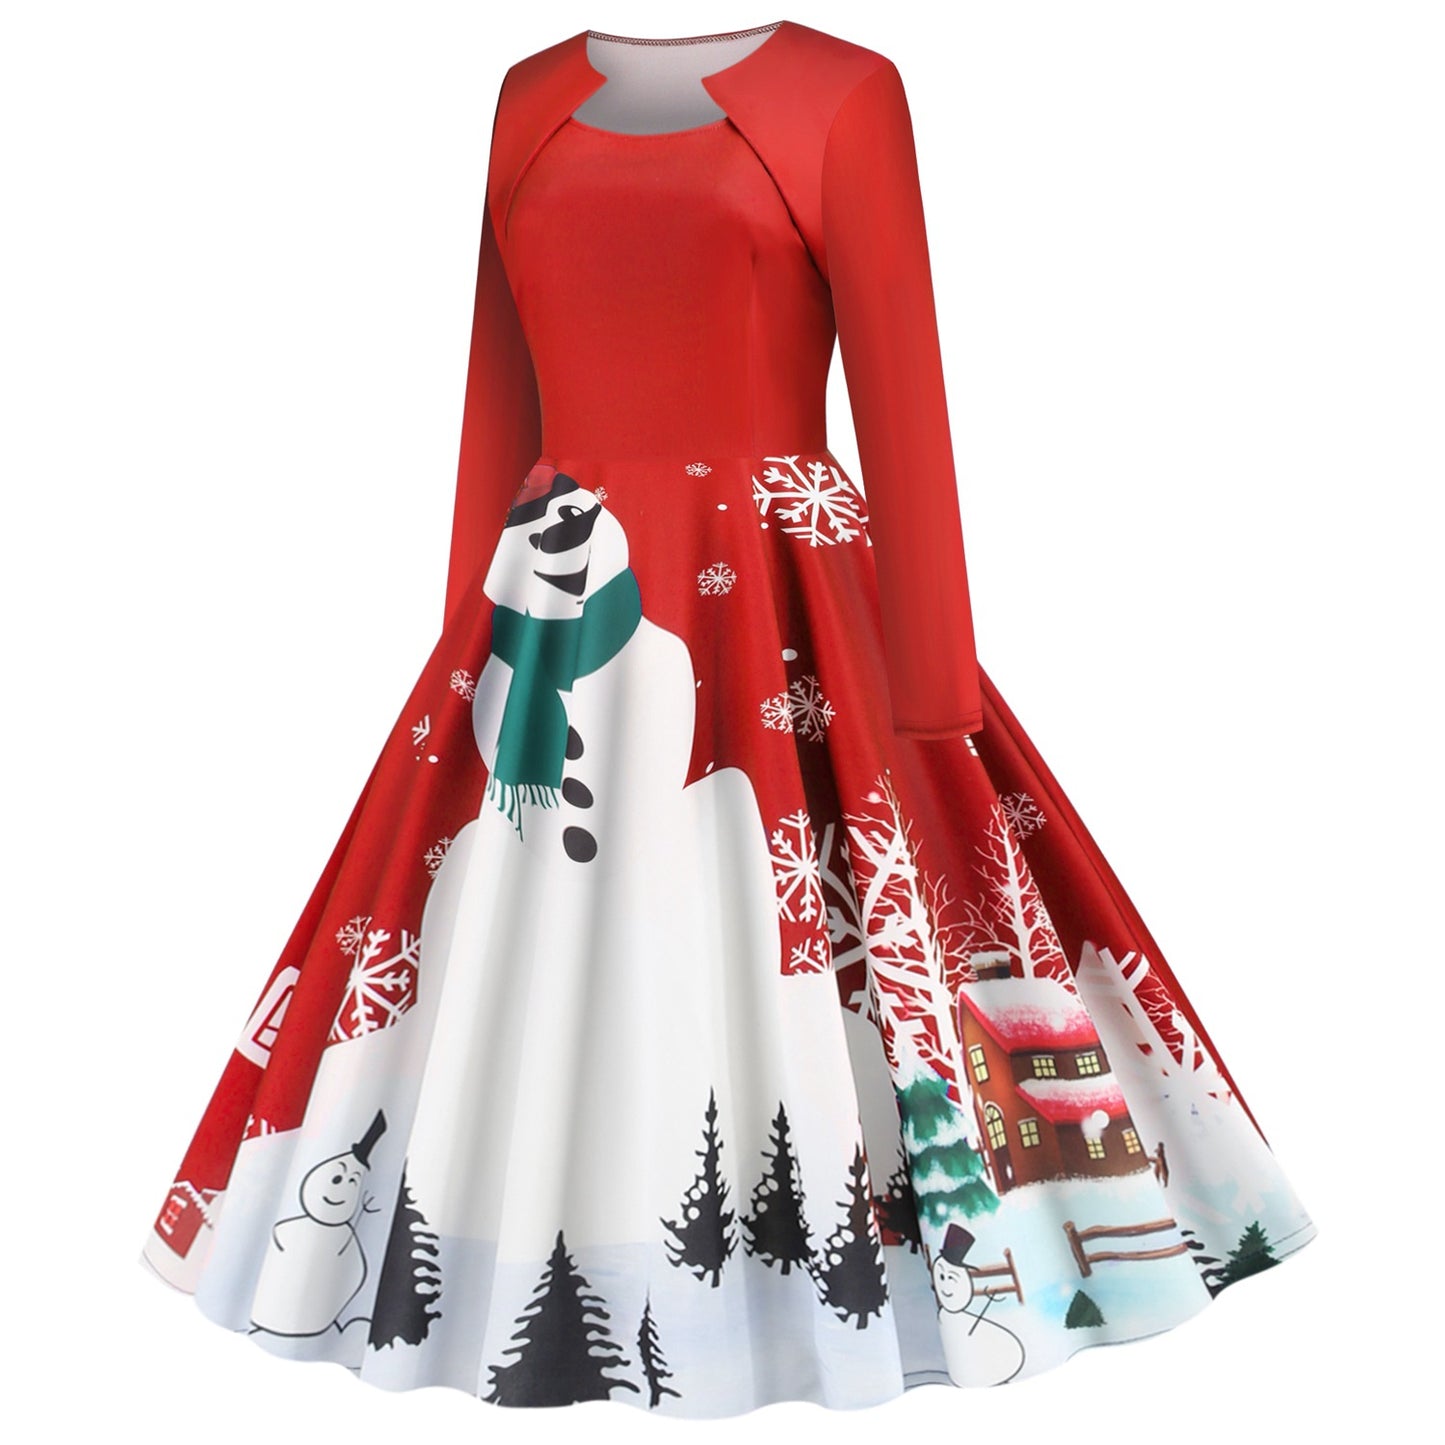 Vintage Square Neckline Long Sleeves Christmas Dresses